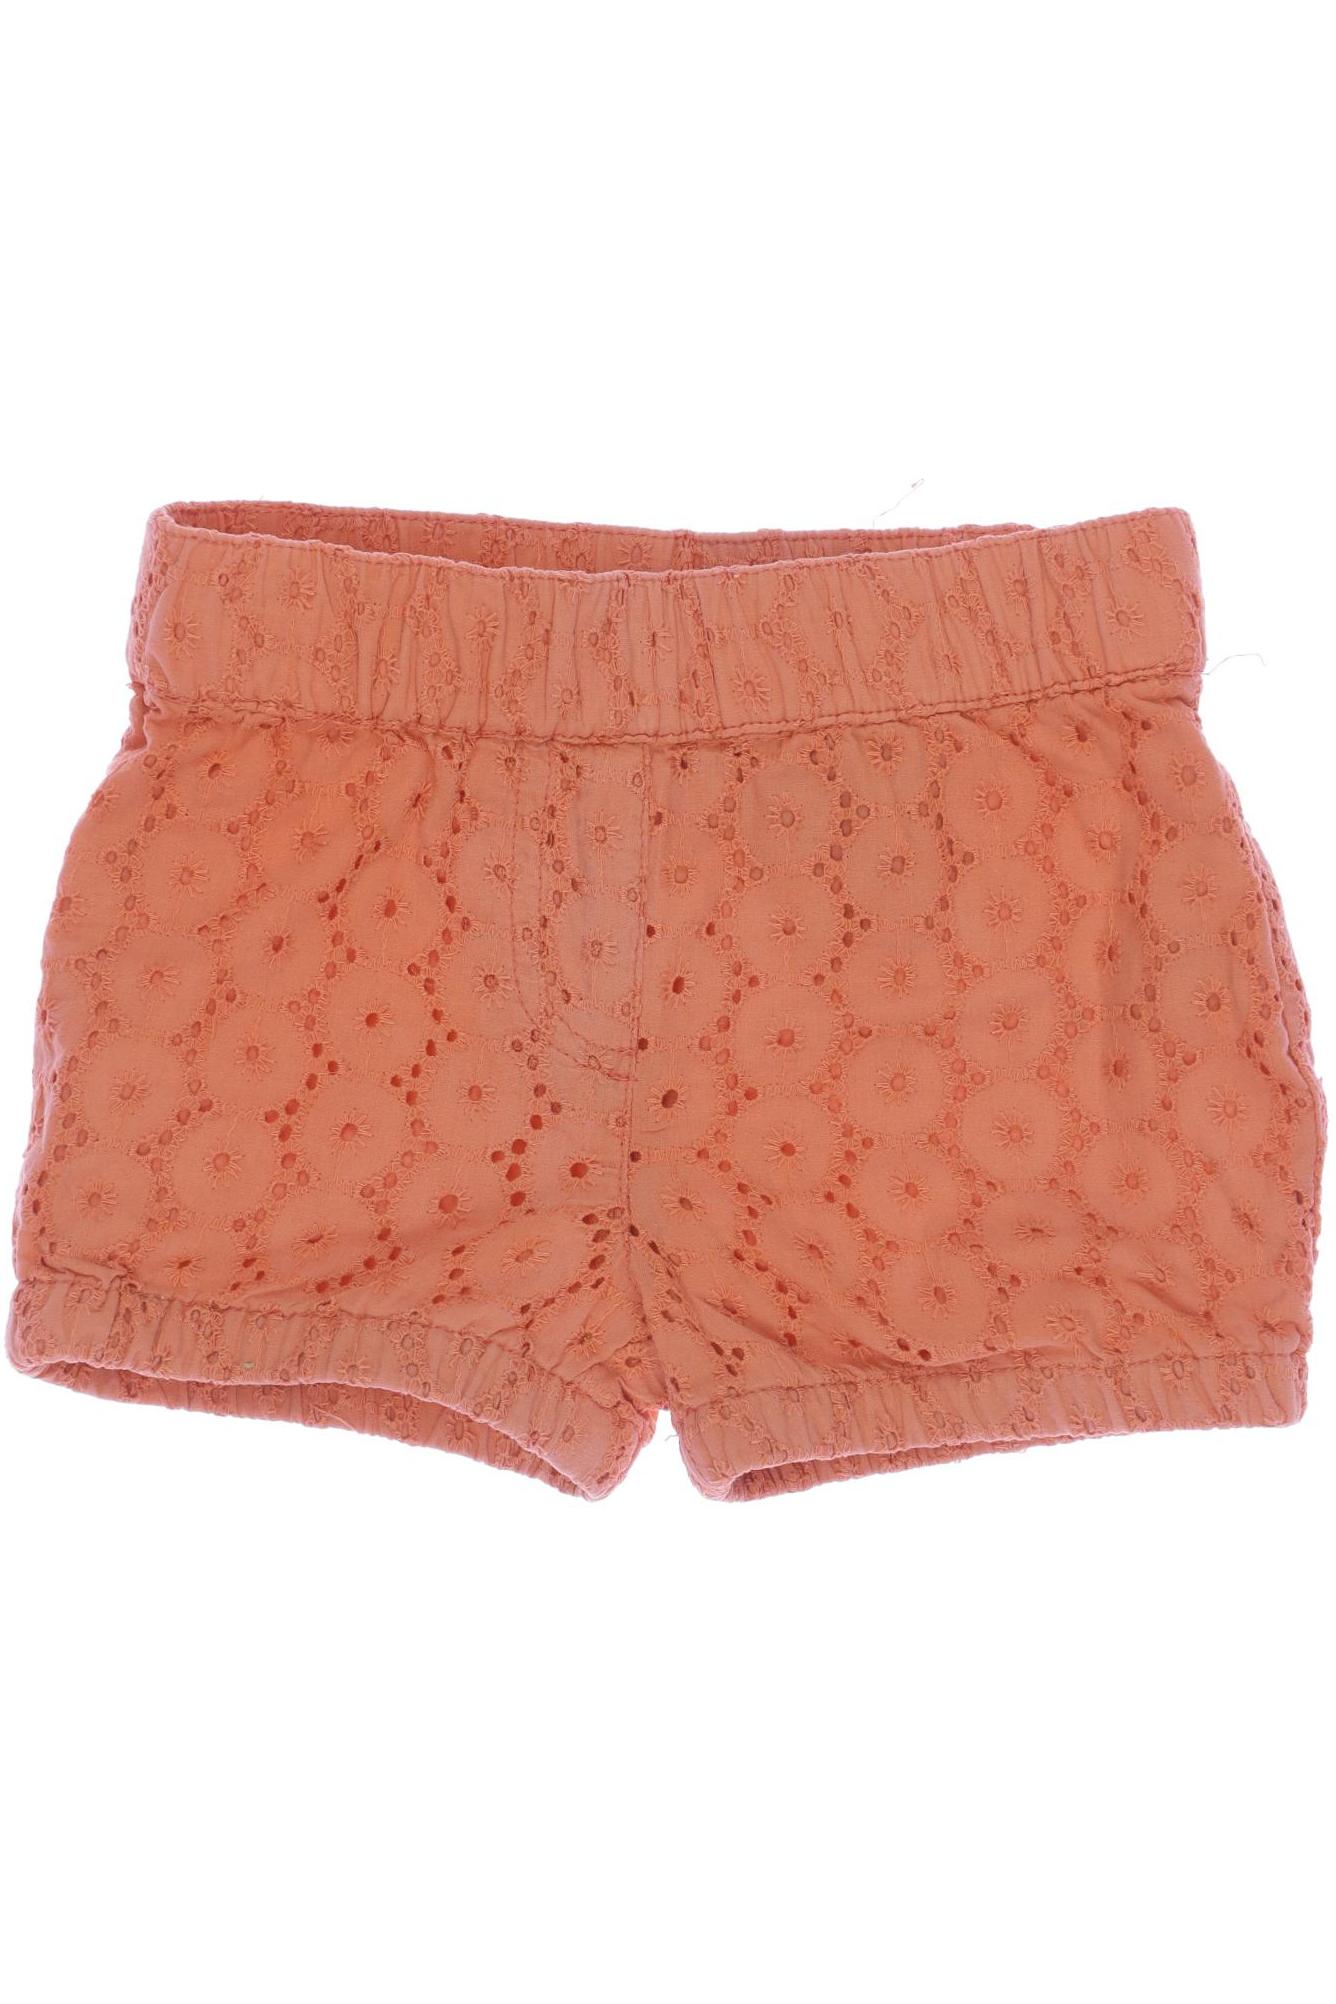 Topomini Damen Shorts, orange, Gr. 80 von Topomini